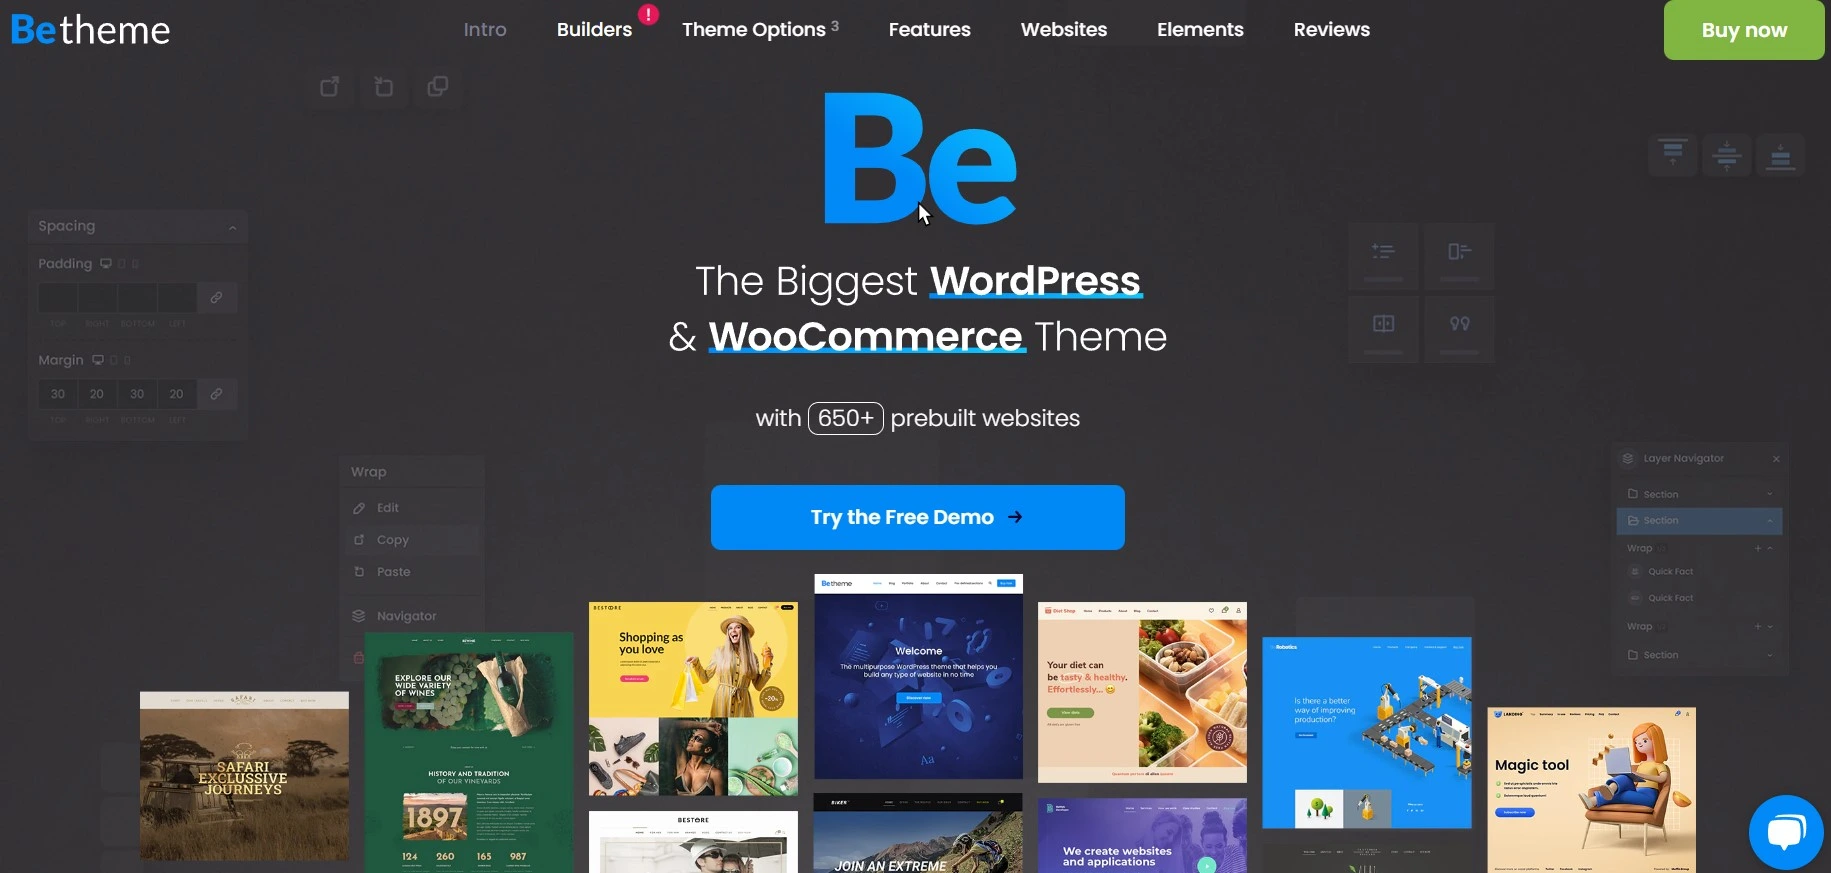 Betheme Wordpress Theme